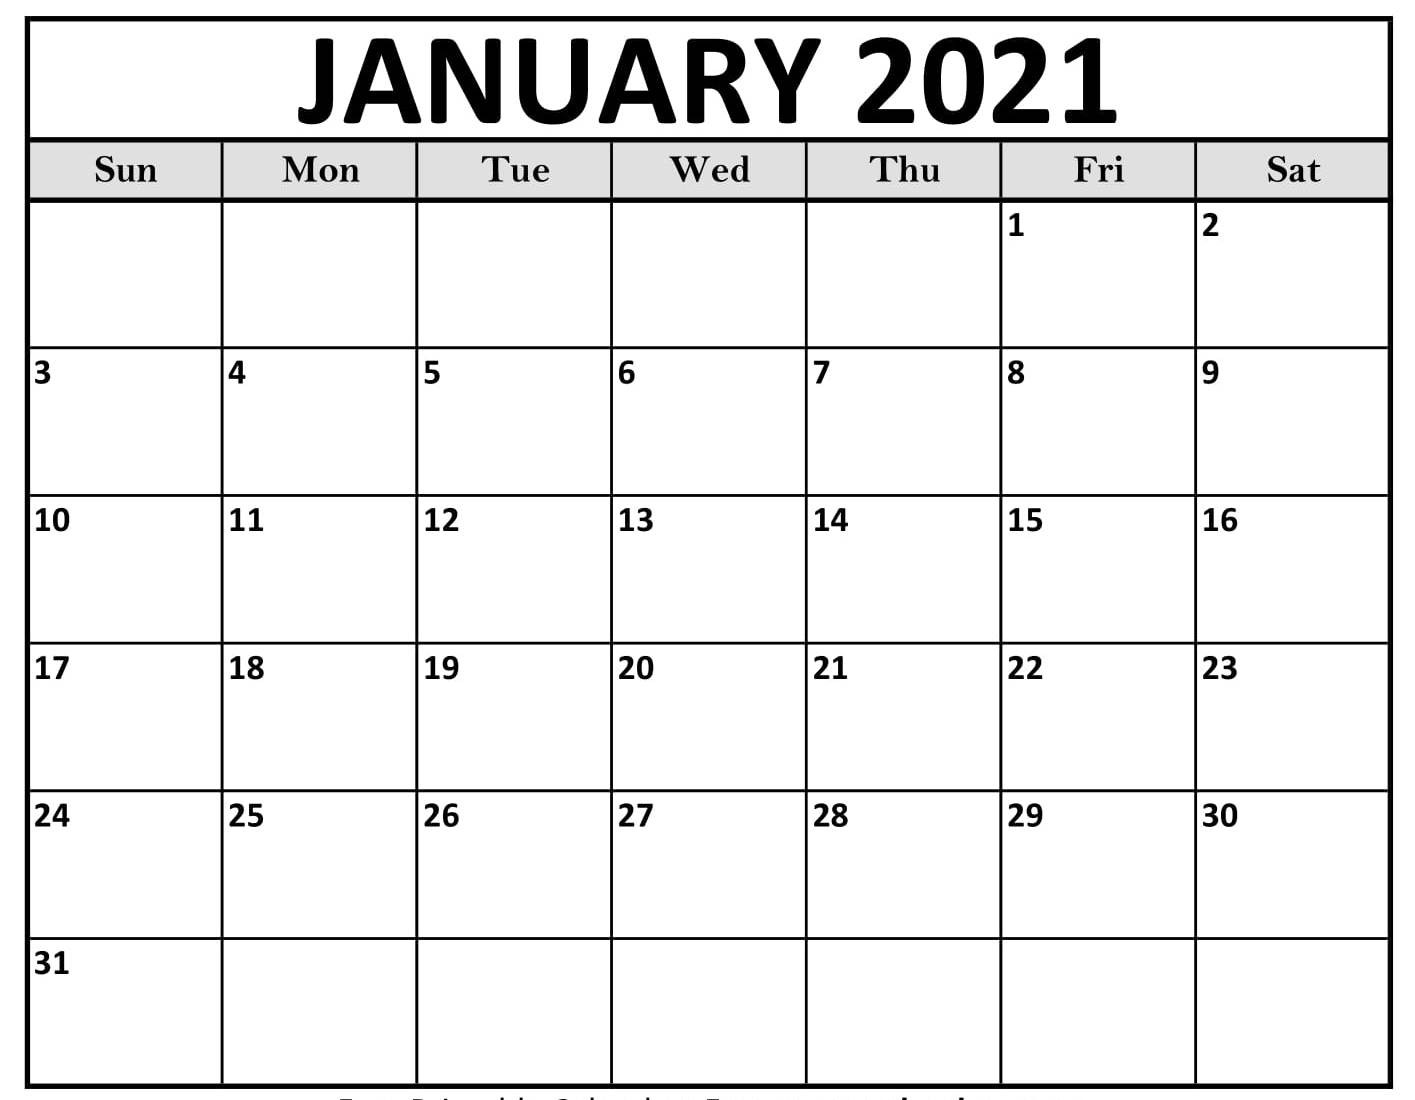 January 2021 Calendar Editable Free : January 2021-January 2021 Calendar